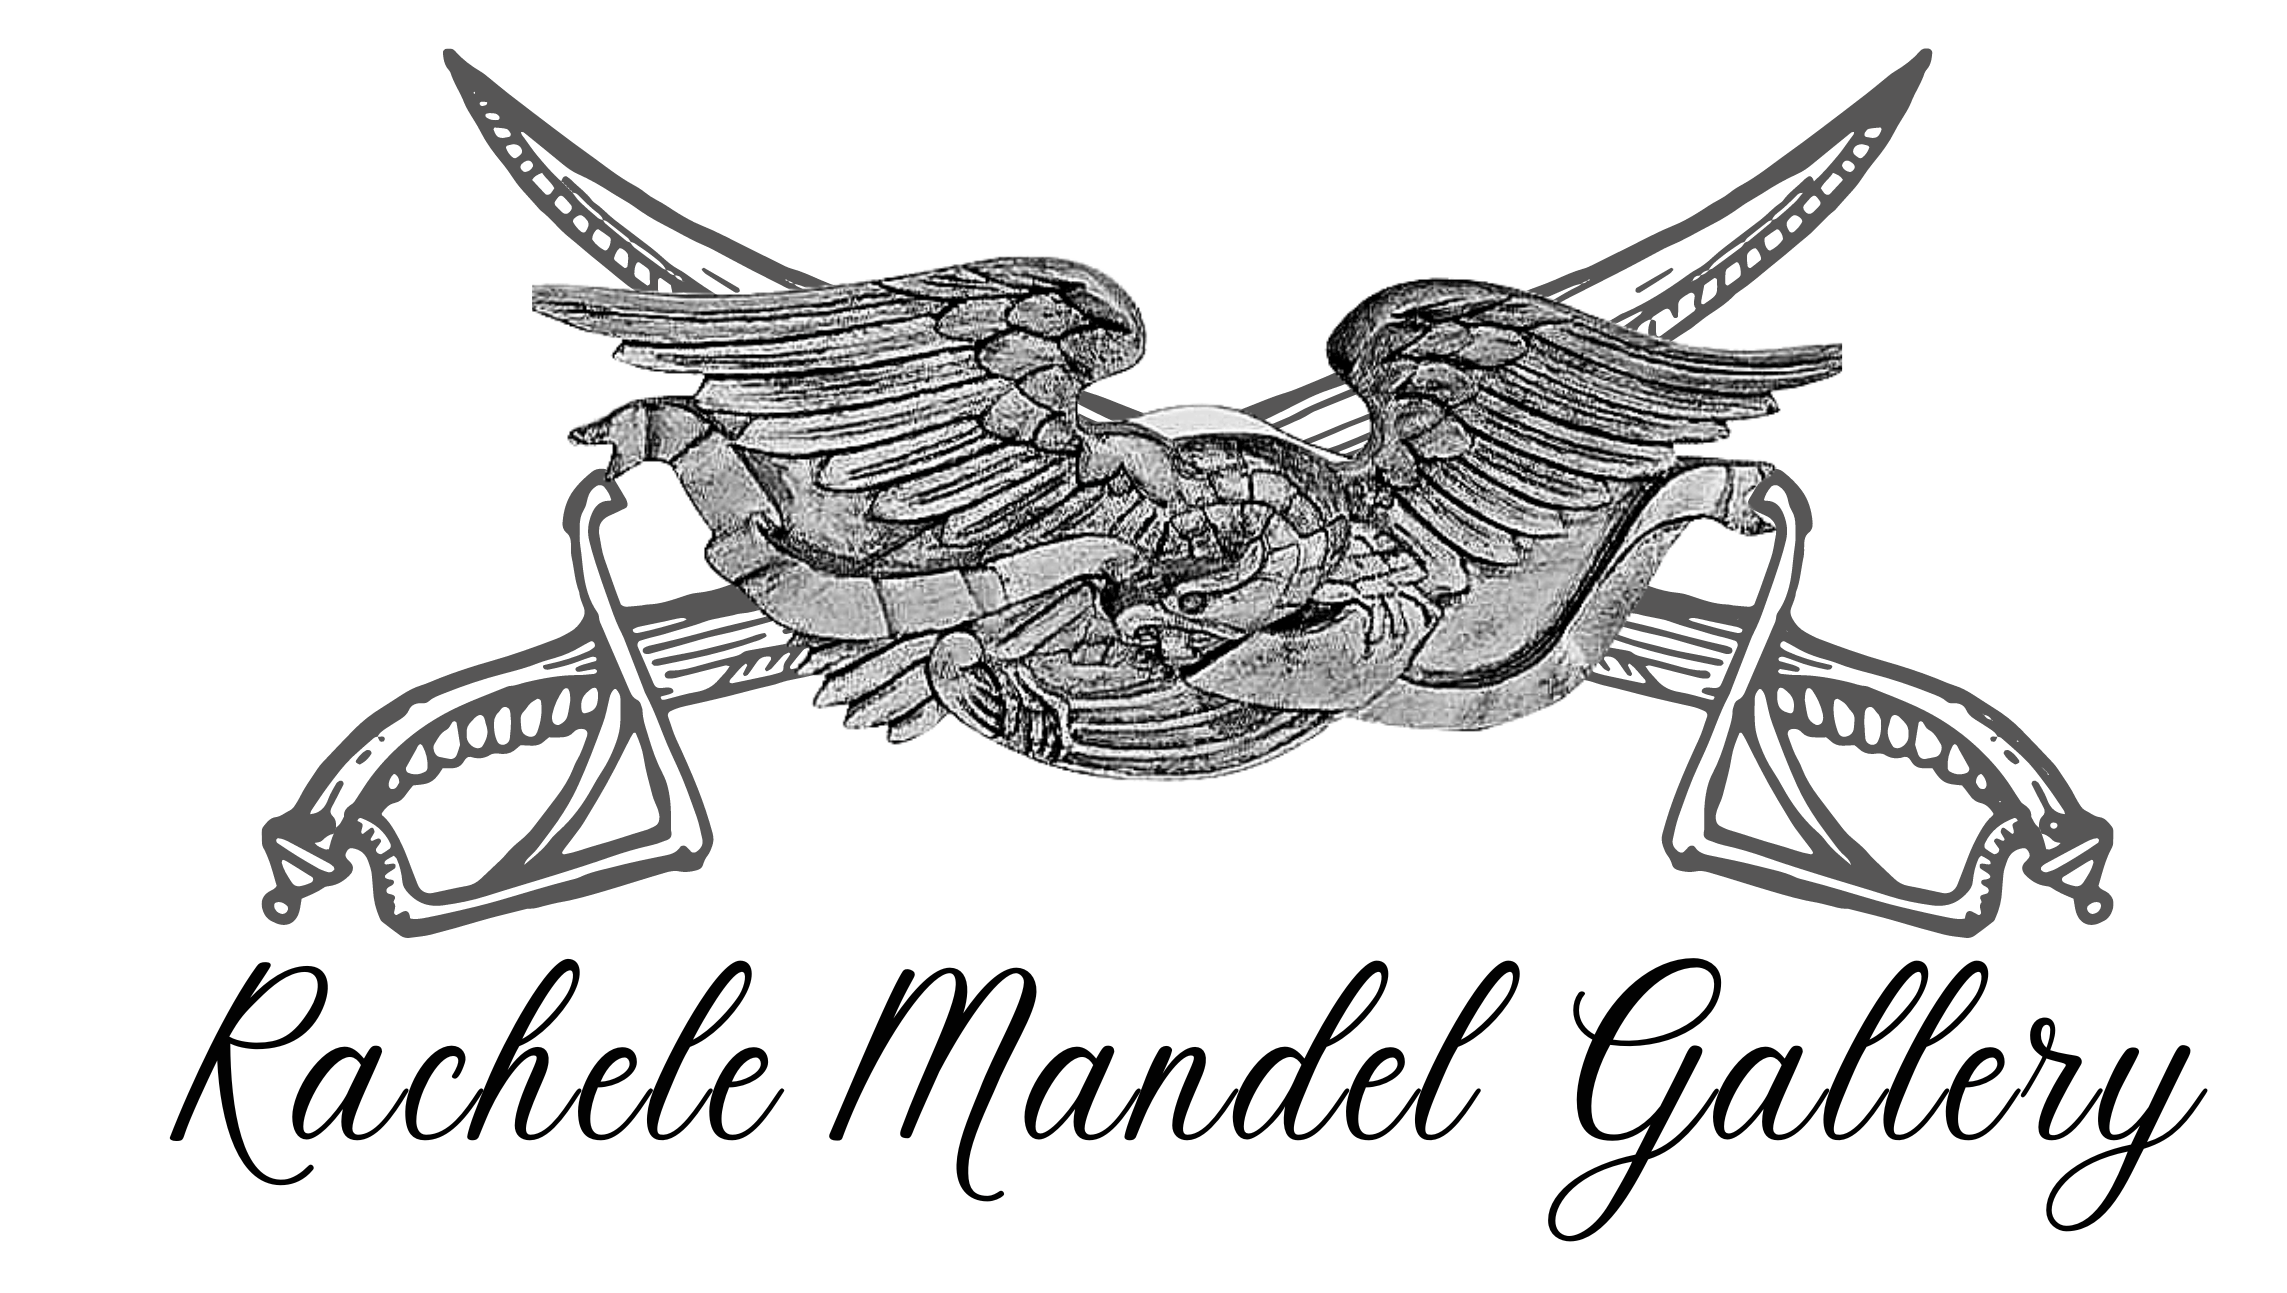 Rachele Mandel Gallery